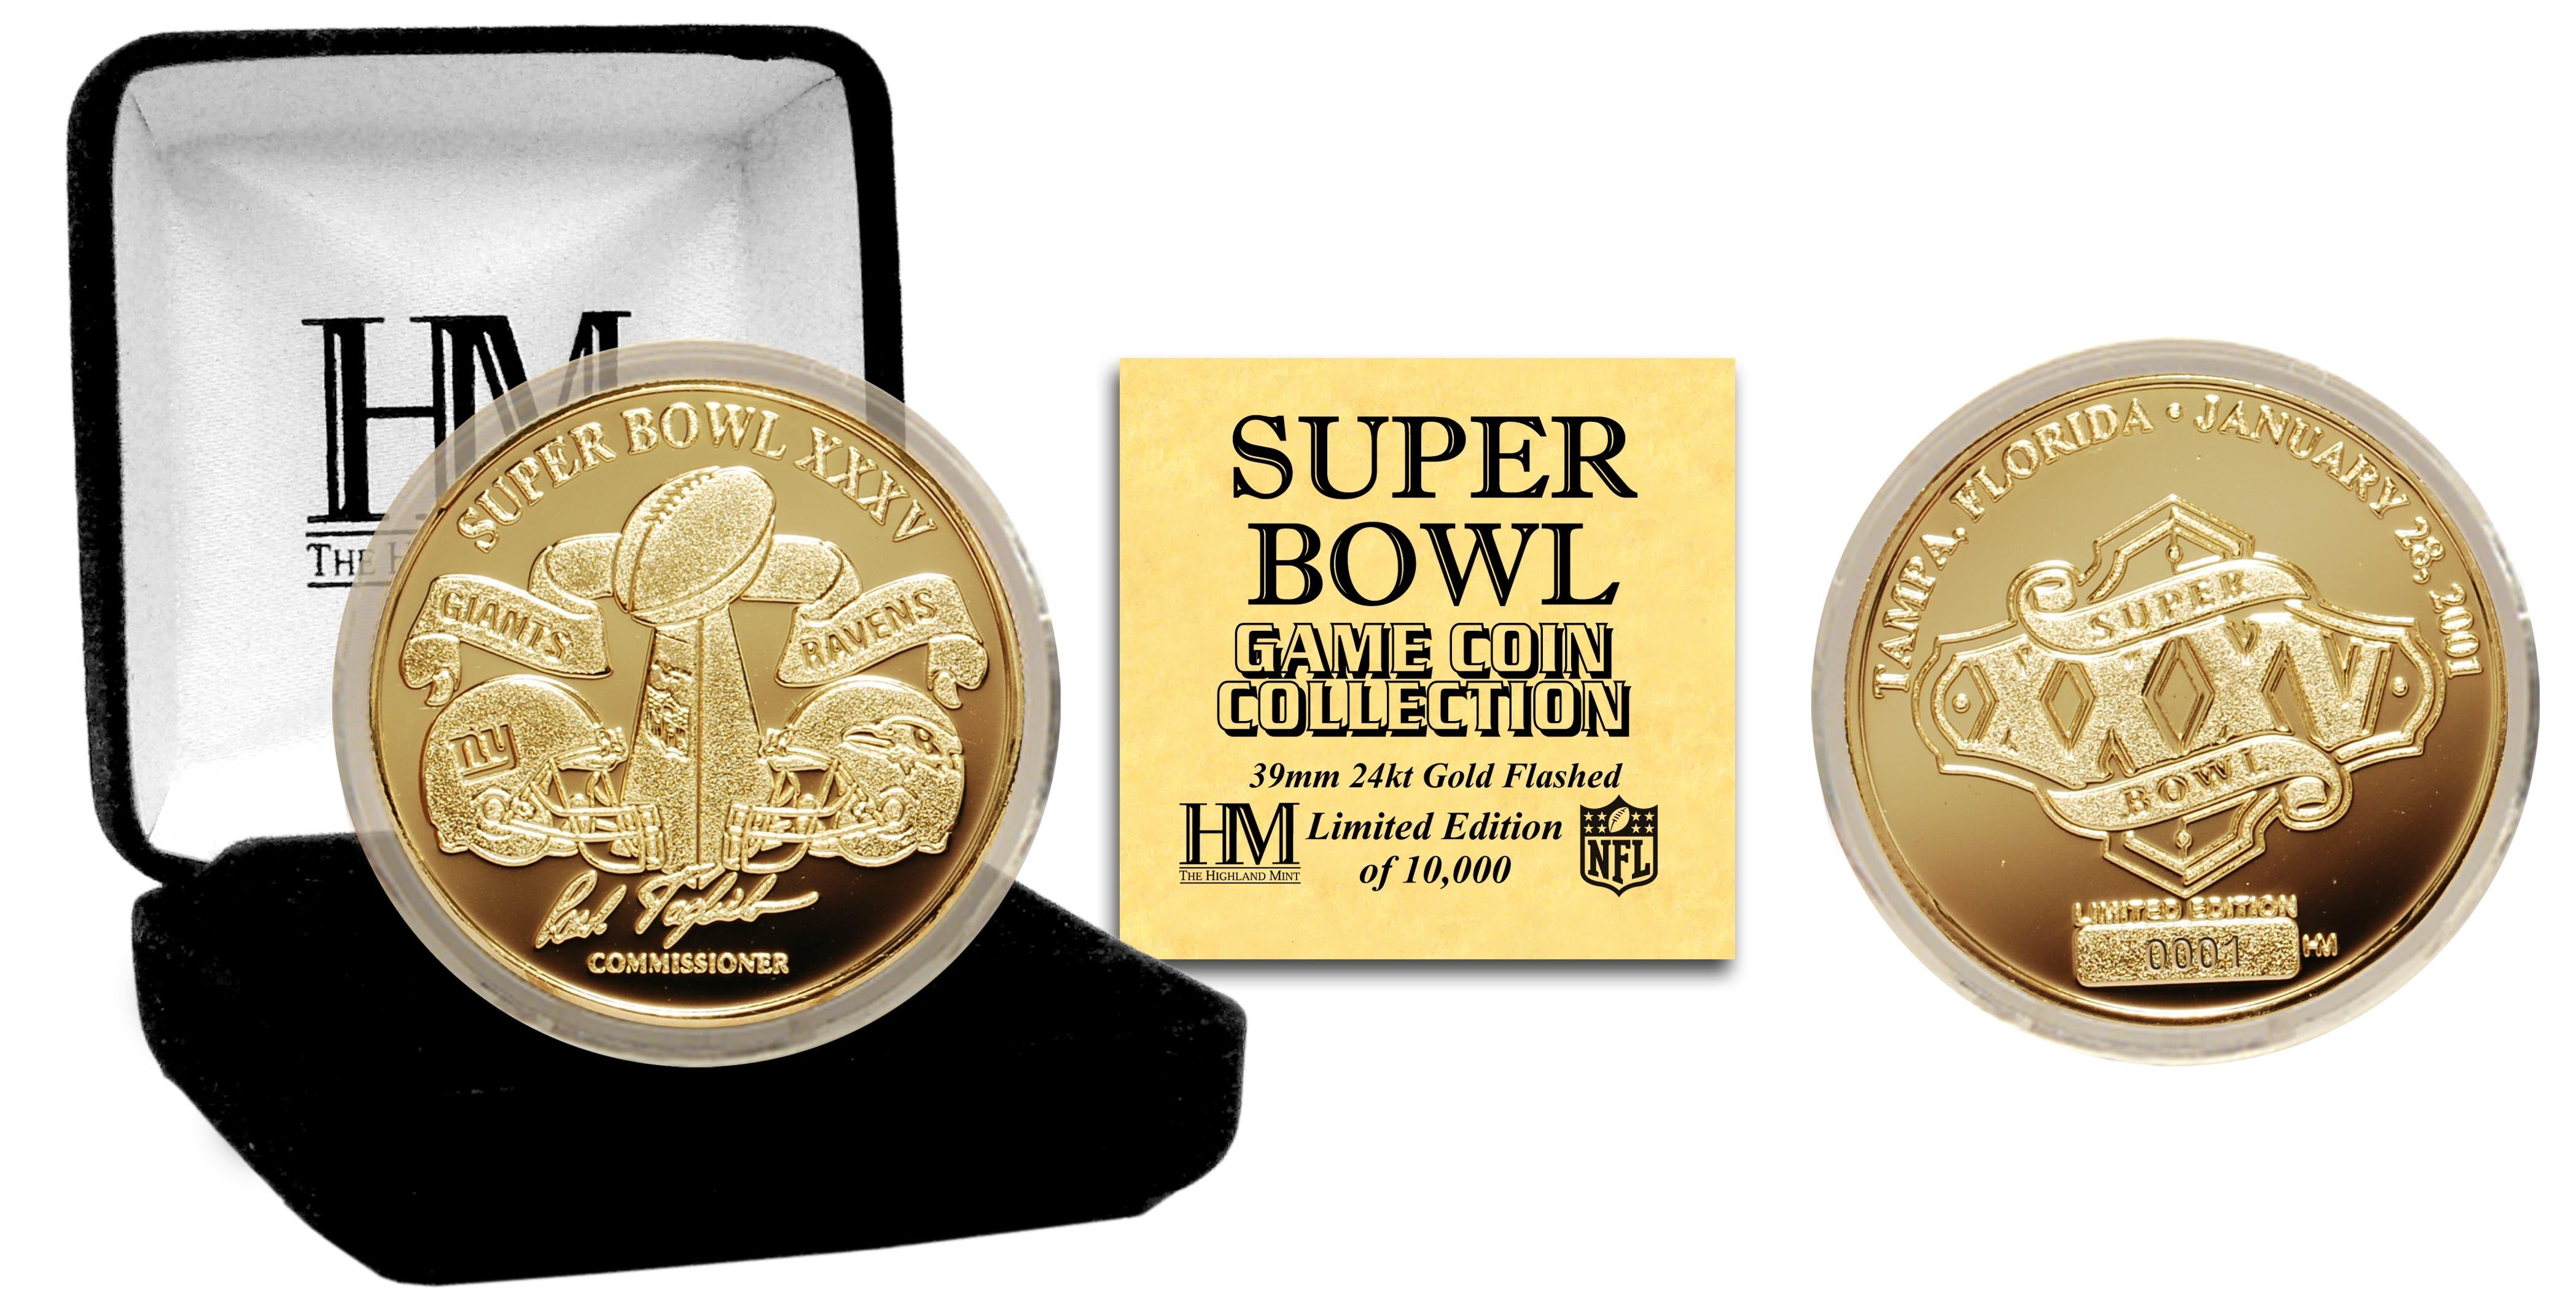 Super Bowl XXXV 24kt Gold Flip Coin